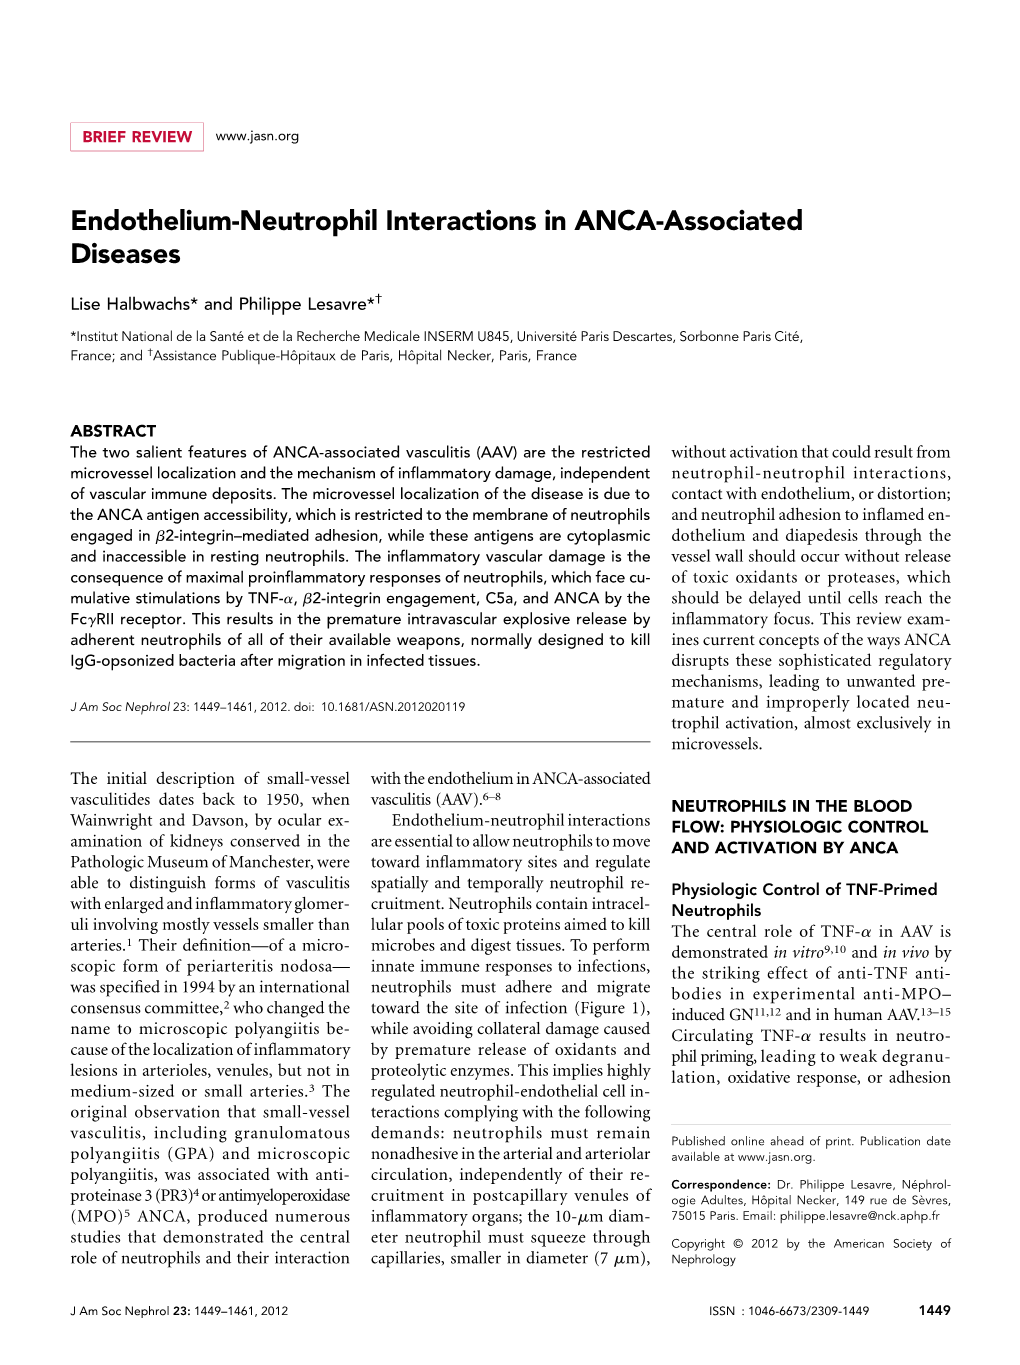 Endothelium-Neutrophil Interactions in ANCA-Associated Diseases